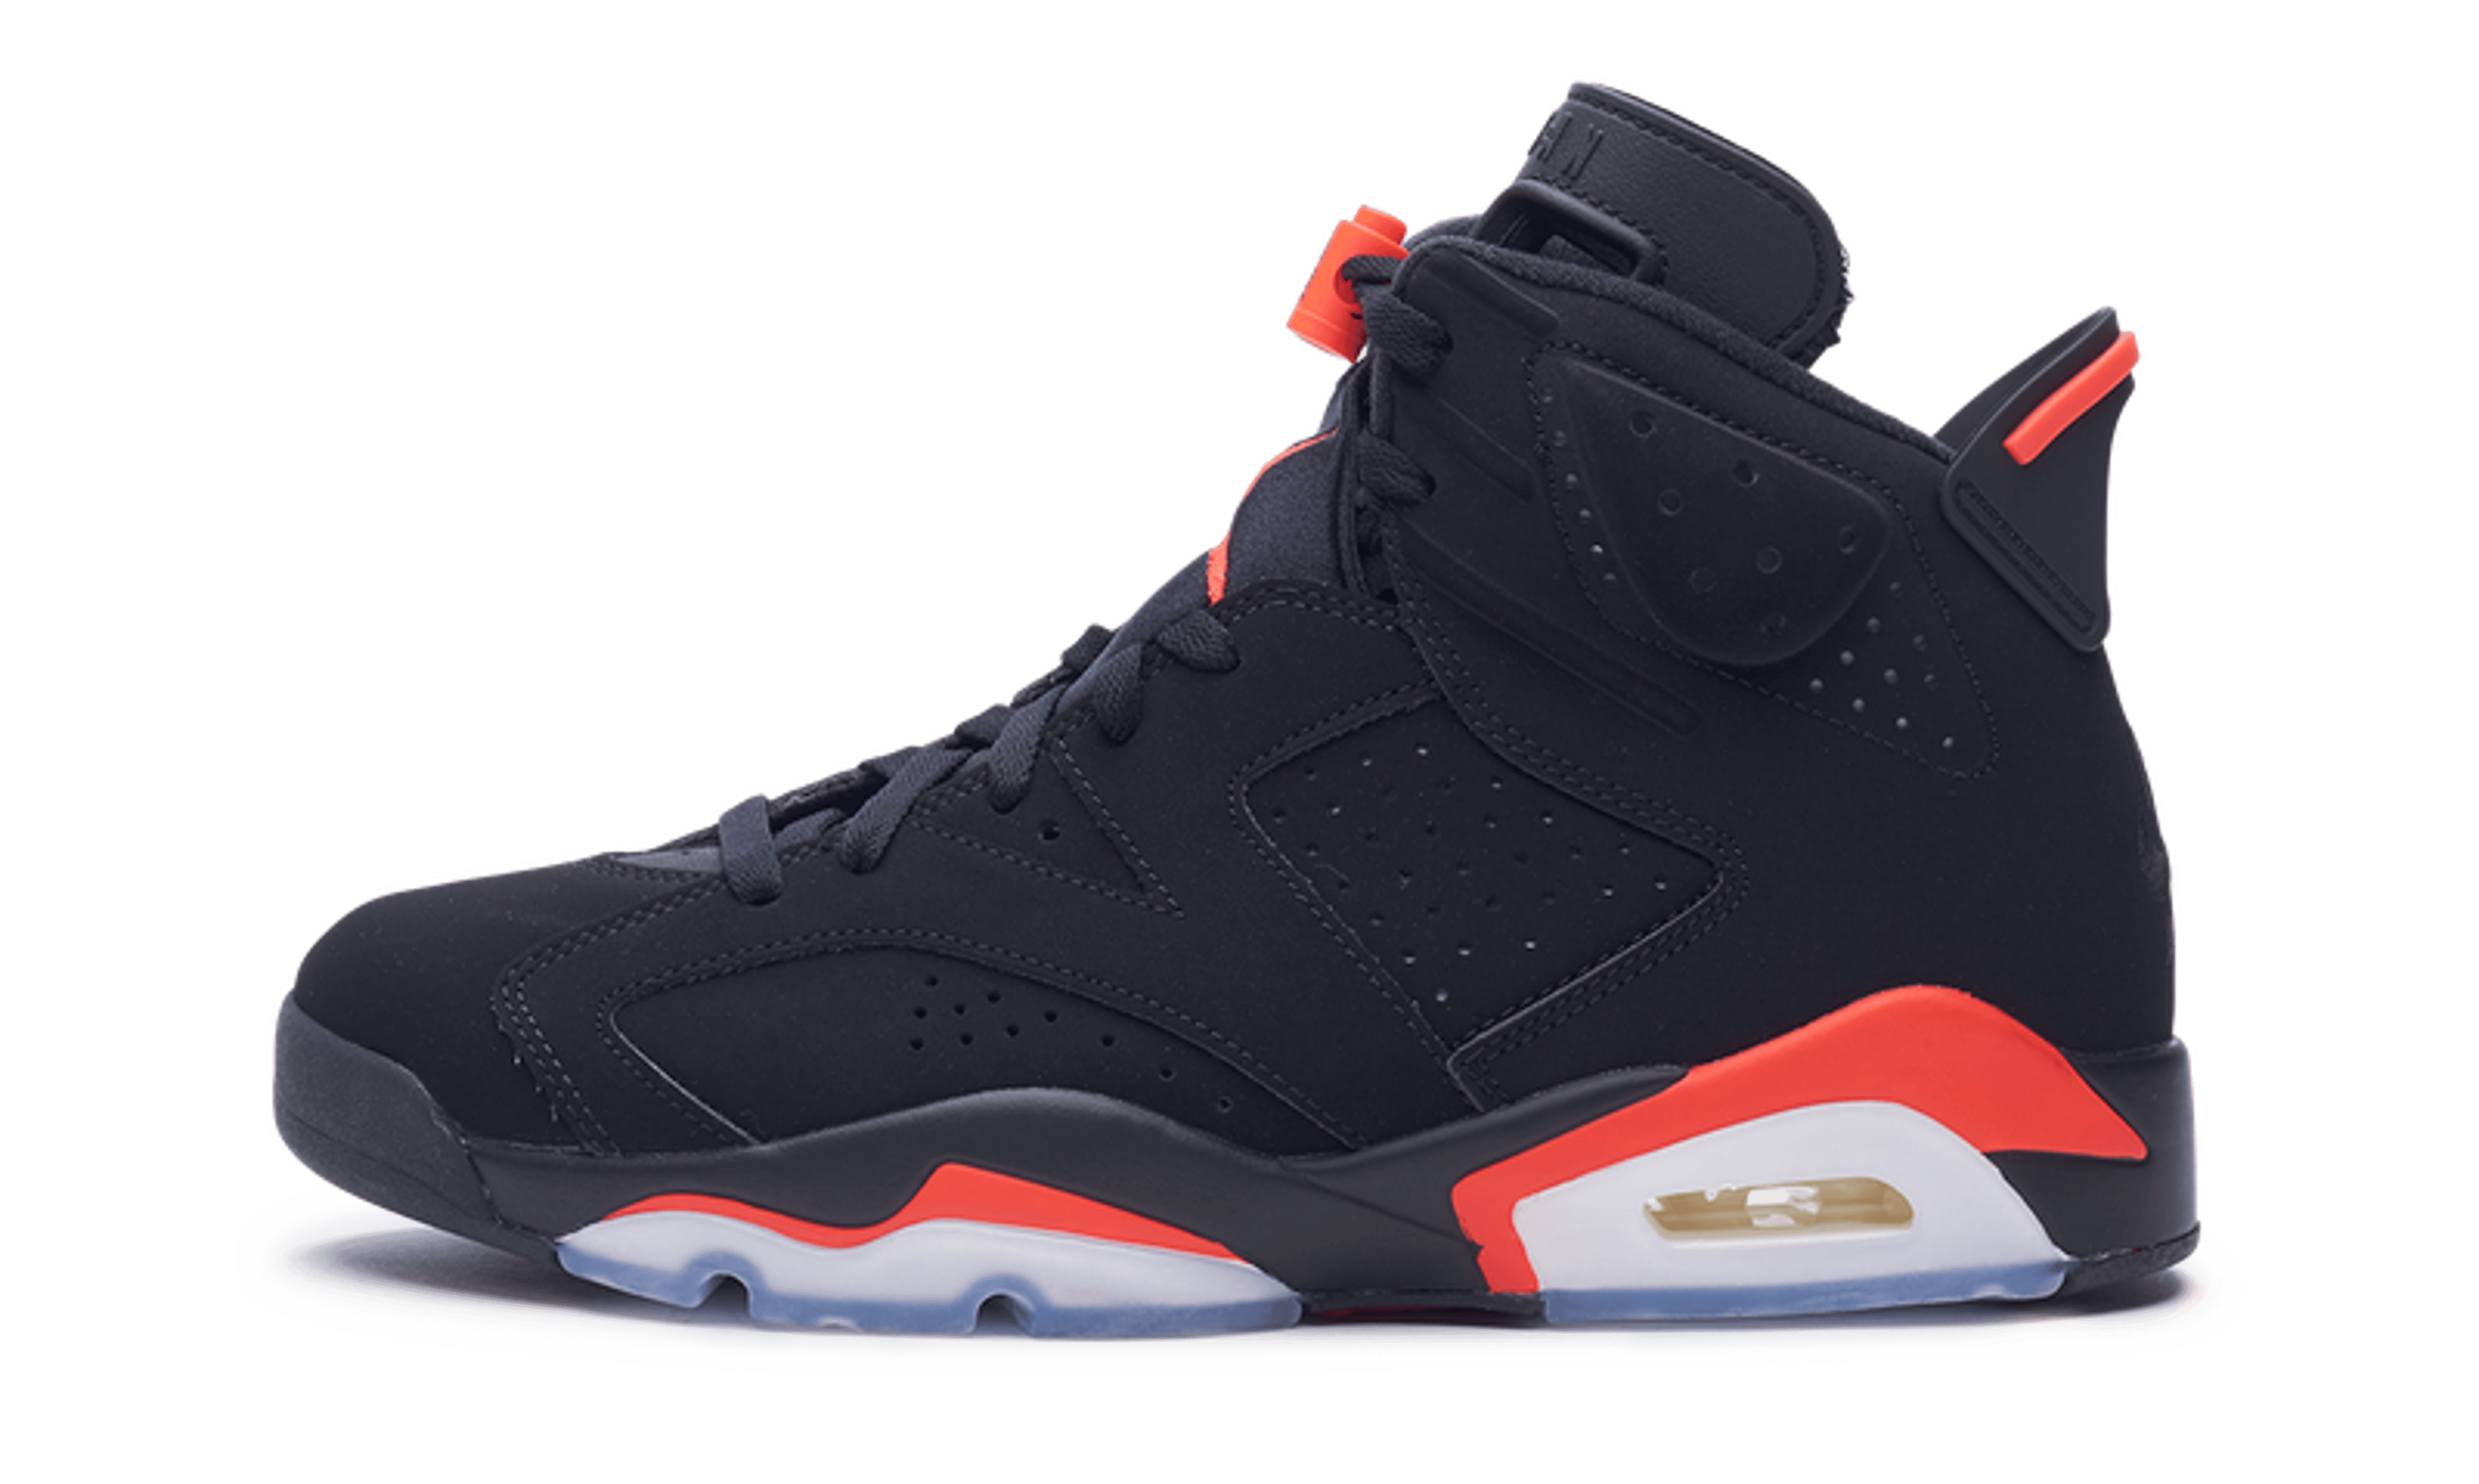 Nike Jordan 6 Retro Black Infrared 2019 (384664-060) Men's Size 